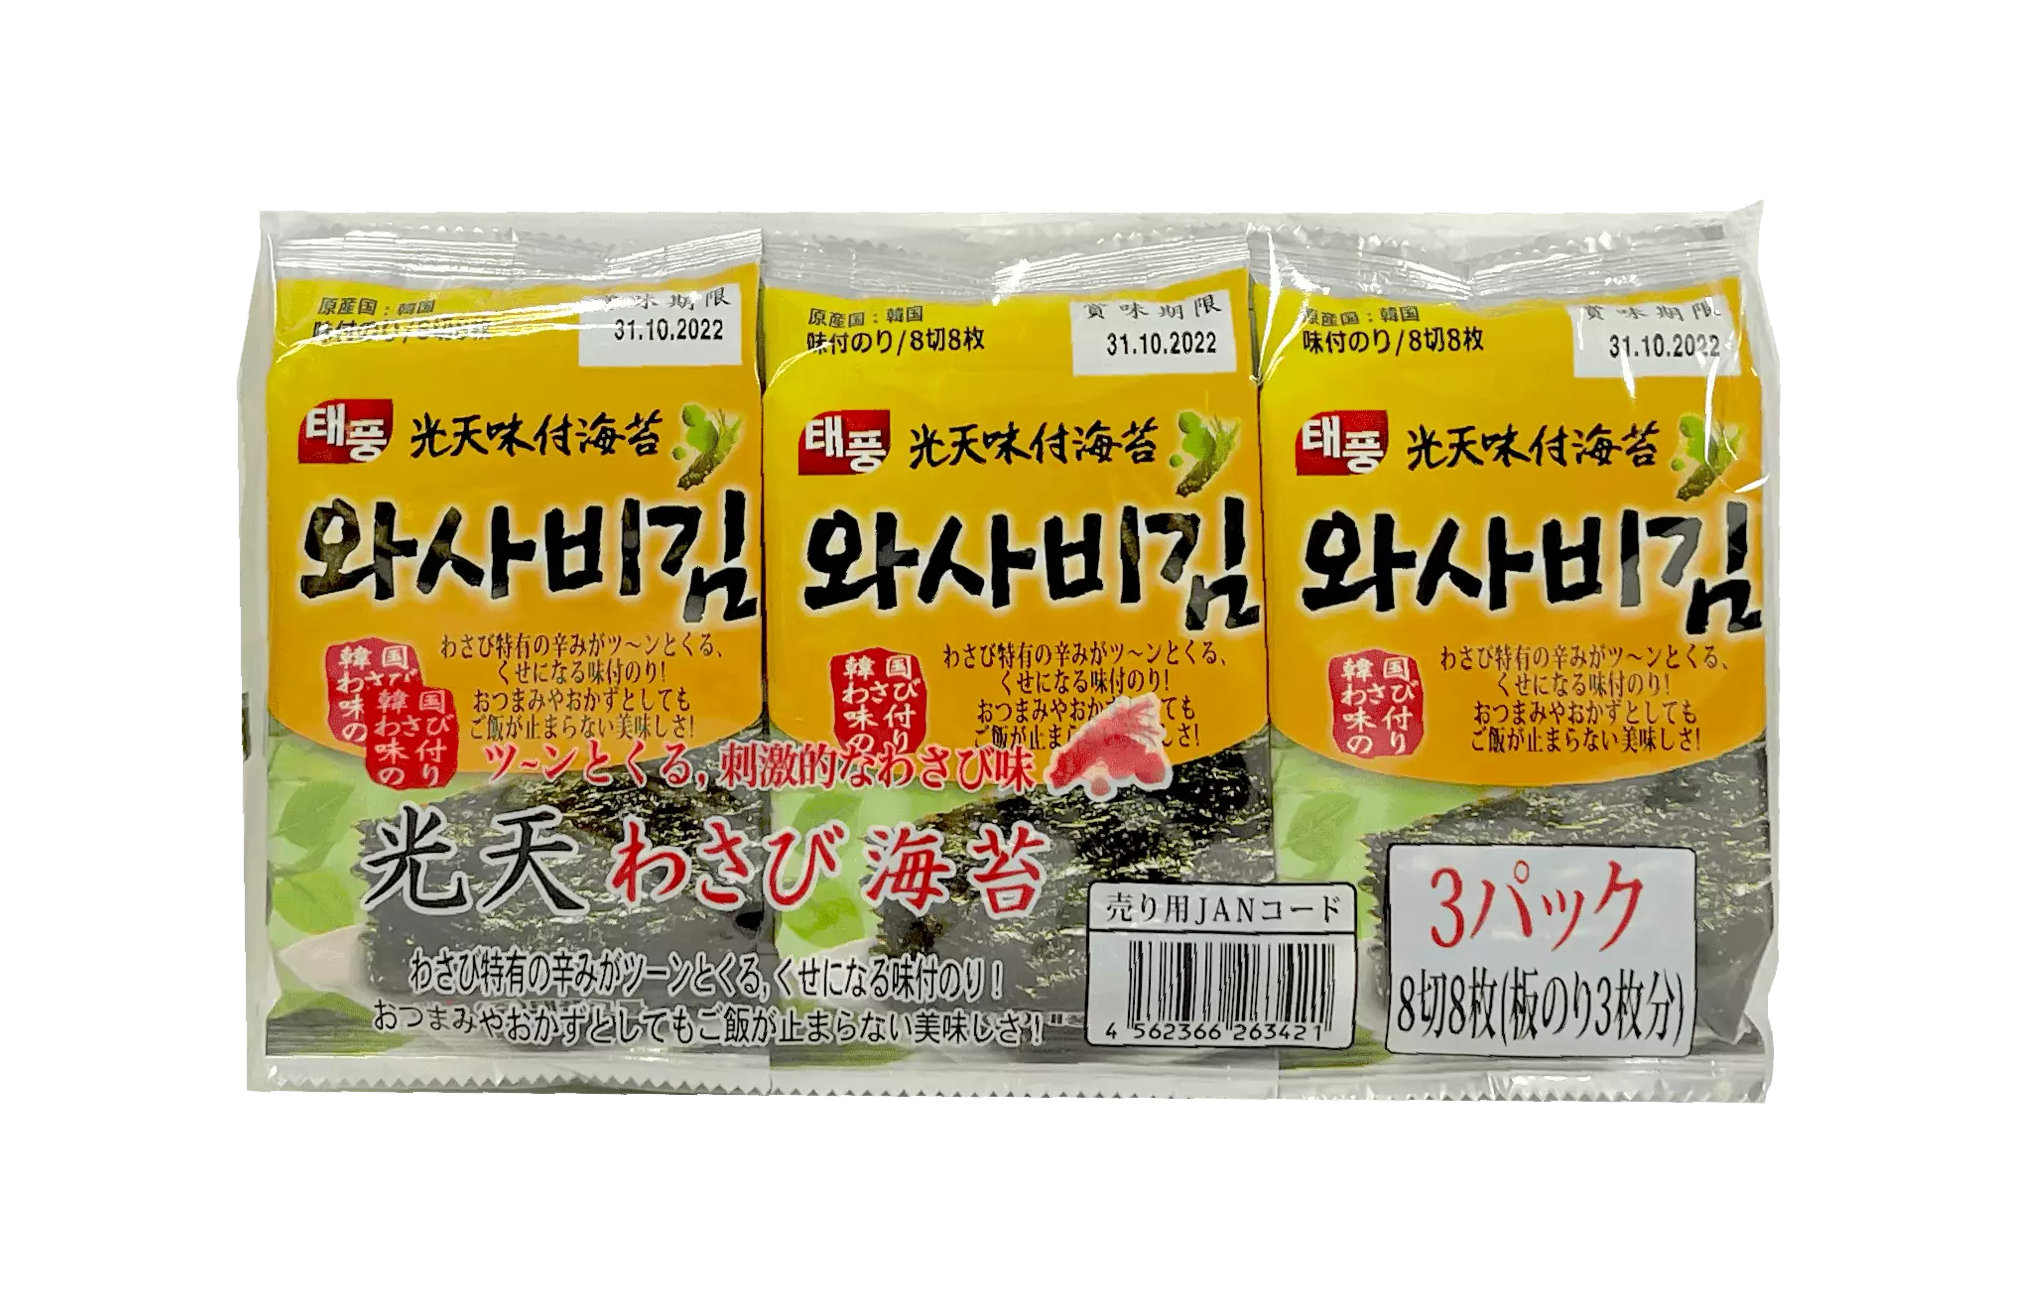 Crispy Seagrass Roasted With Wasabi Flavor (4gx3pcs) NH Korean